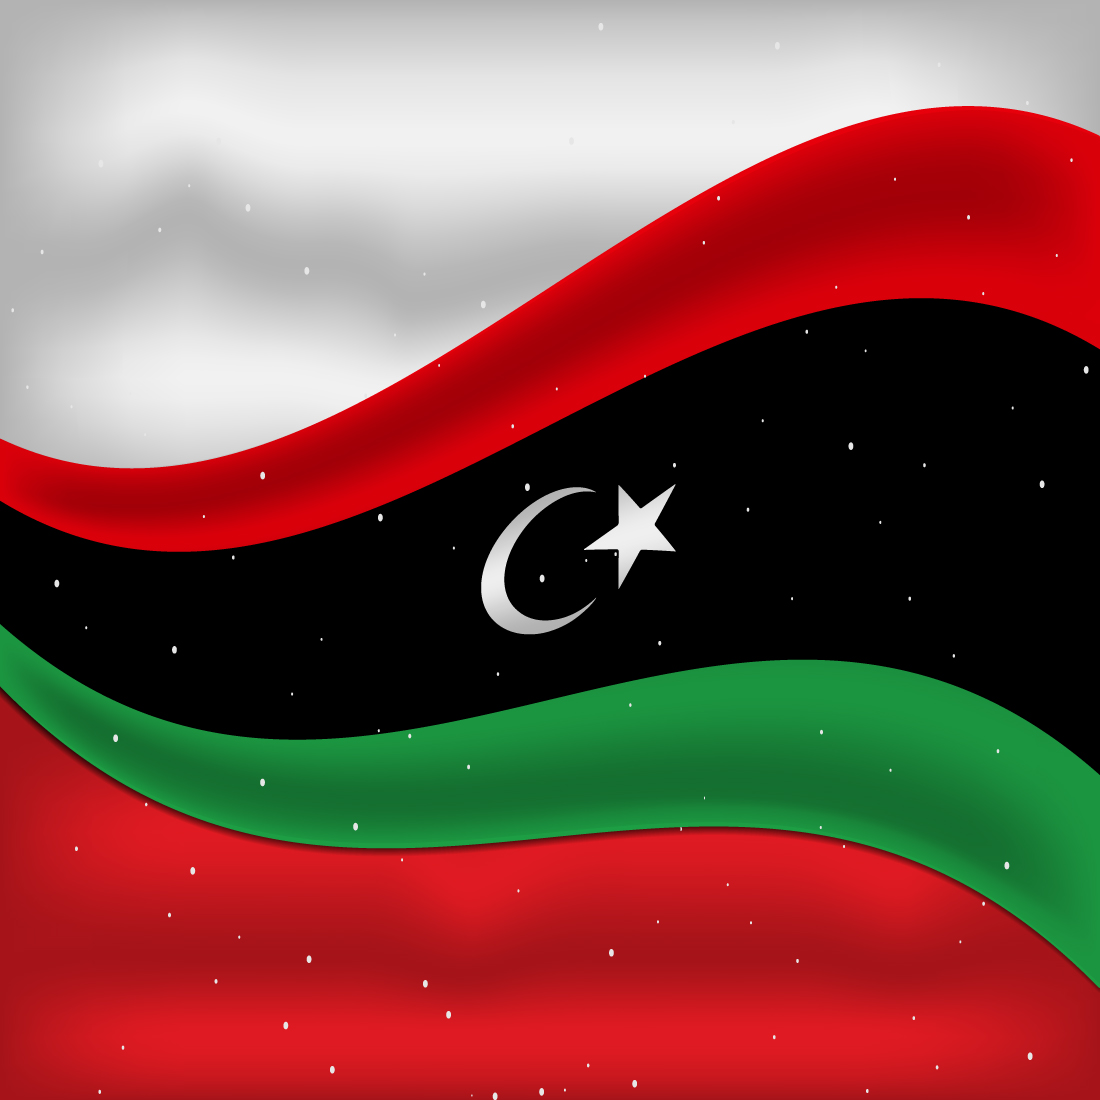 Gorgeous image of the flag of Libya.